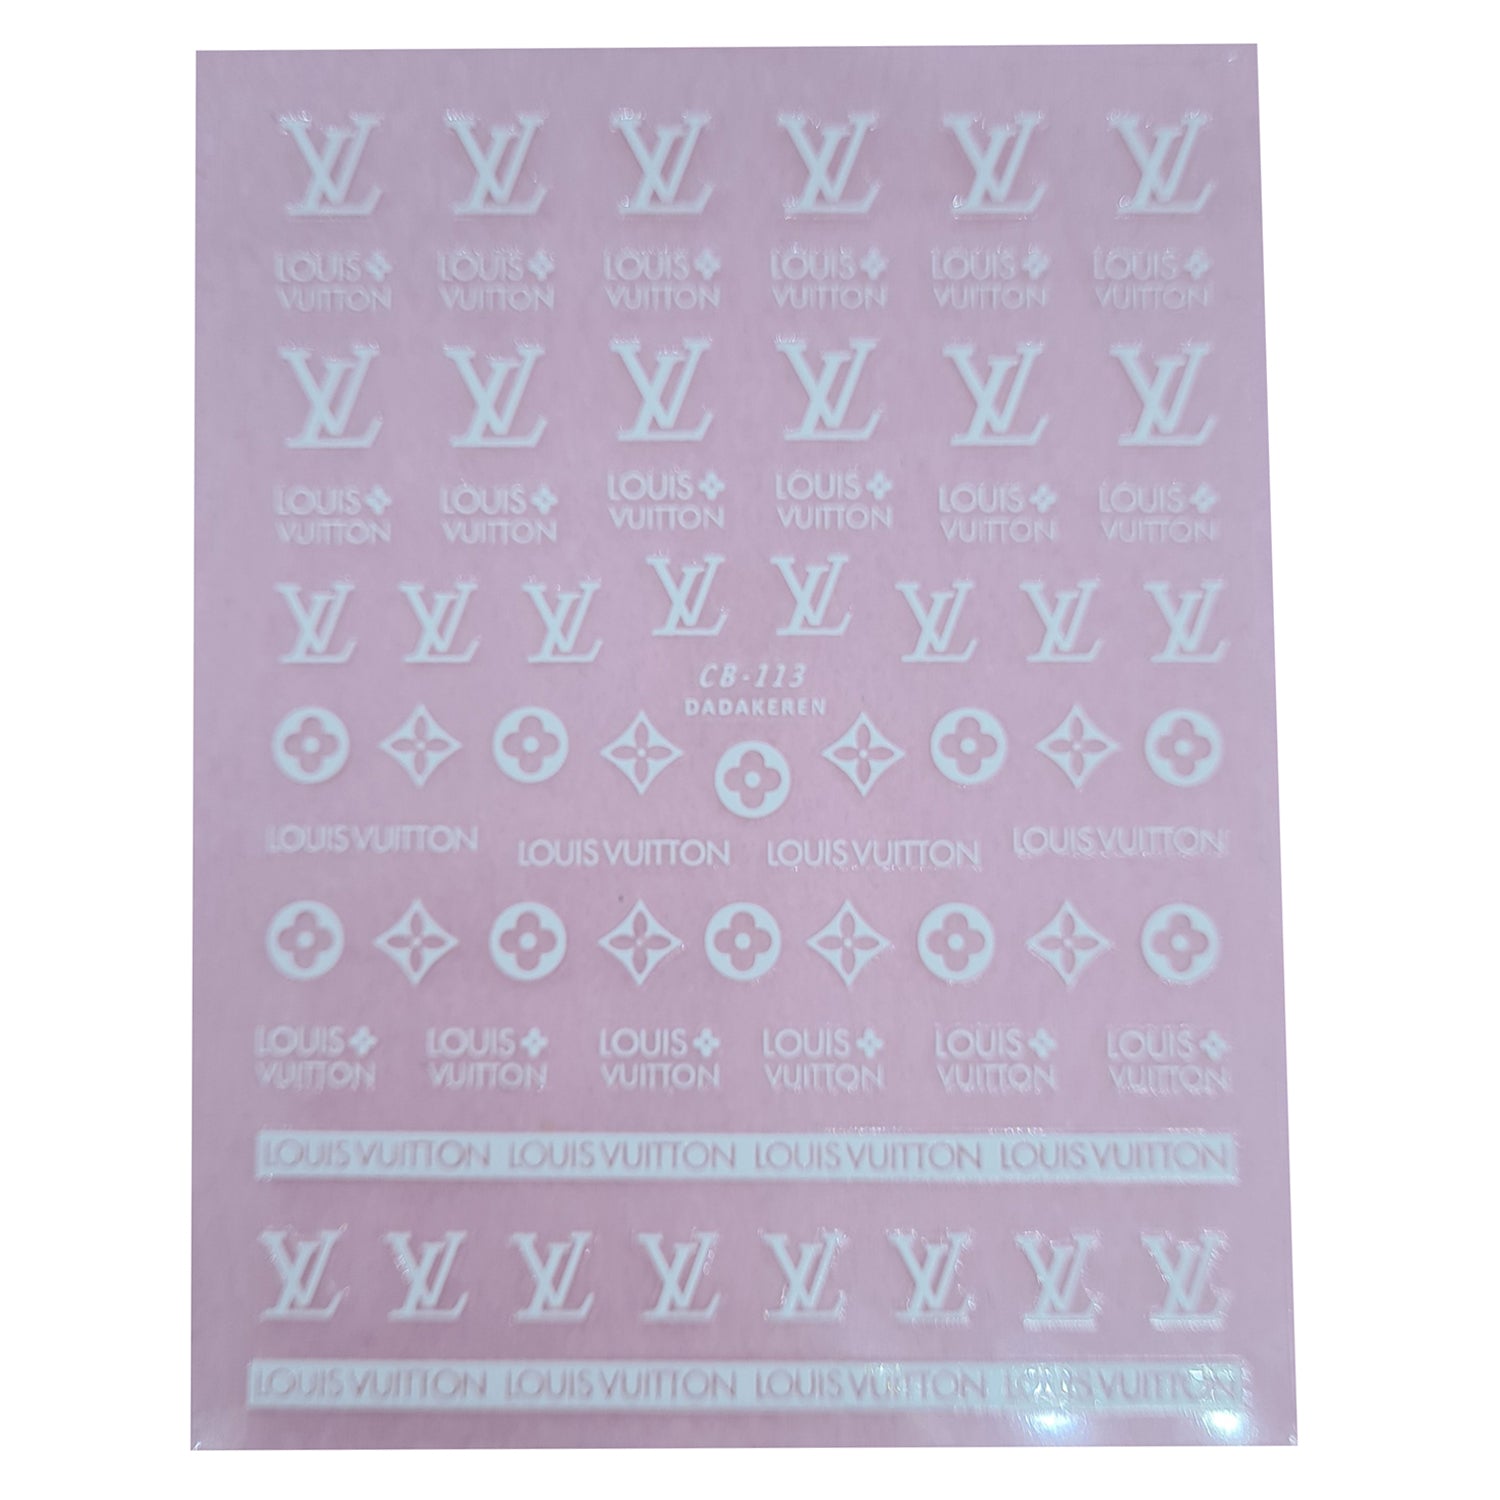 Louis Vuitton nail stickers